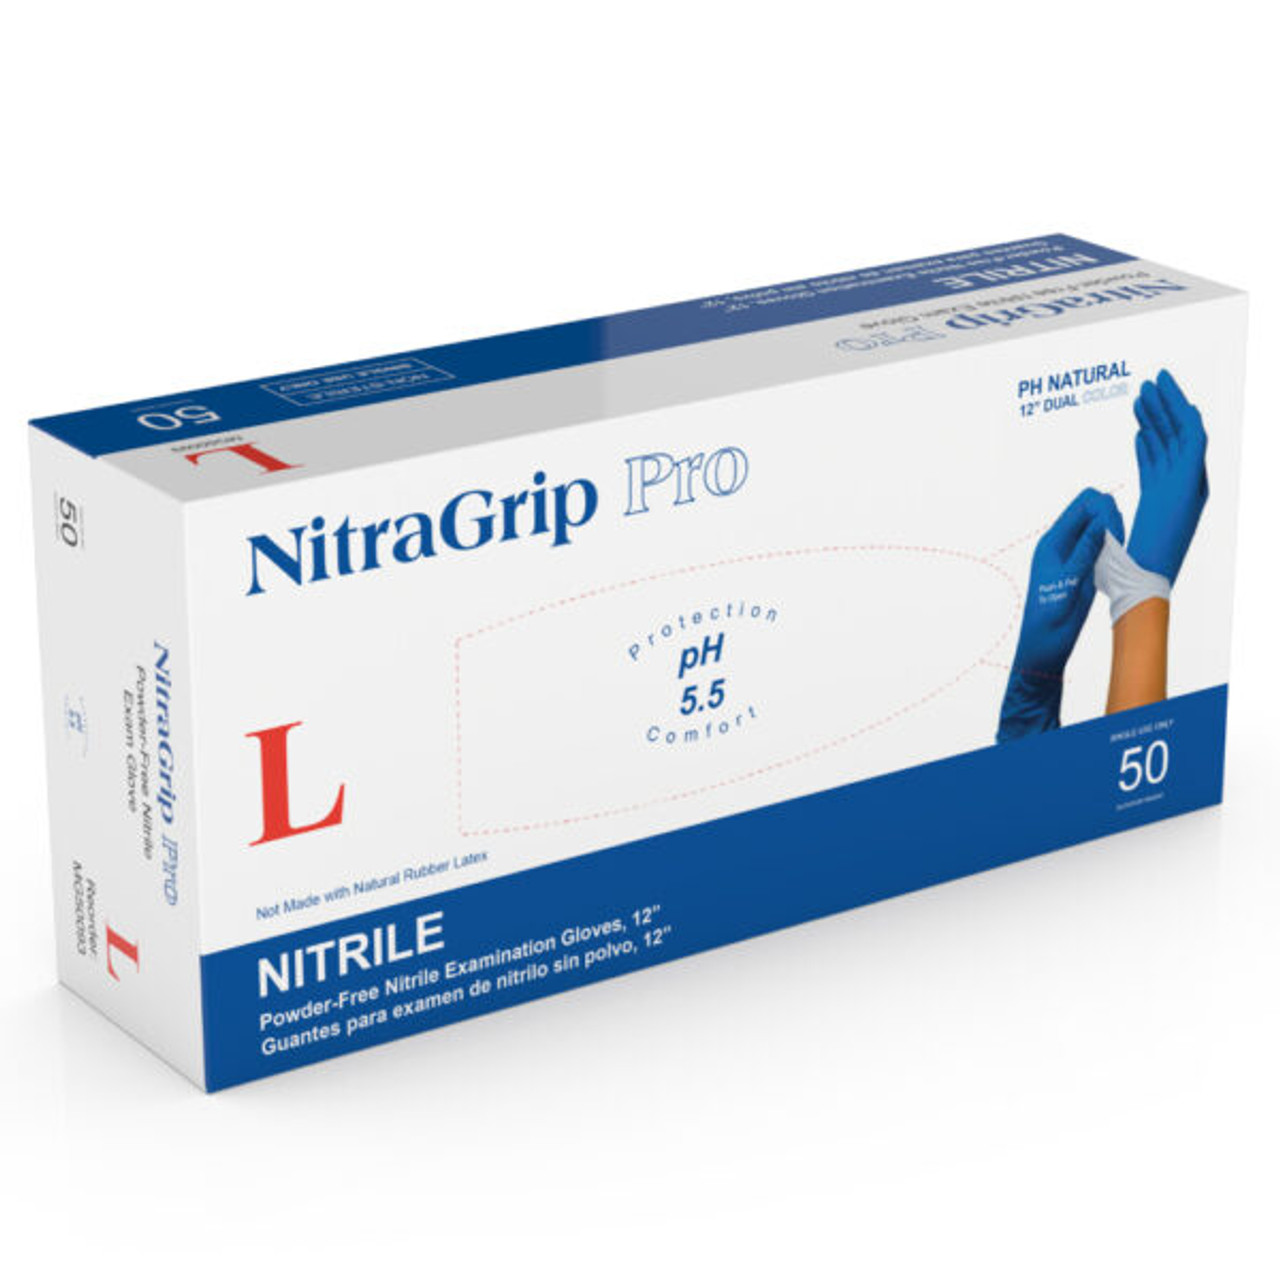 Medgluv Nitragrip Pro Nitrile Exam Glove, 2-Ply, Blue/ White, Chemo, 8.2mil, X-Large 50/bx, 10/cs